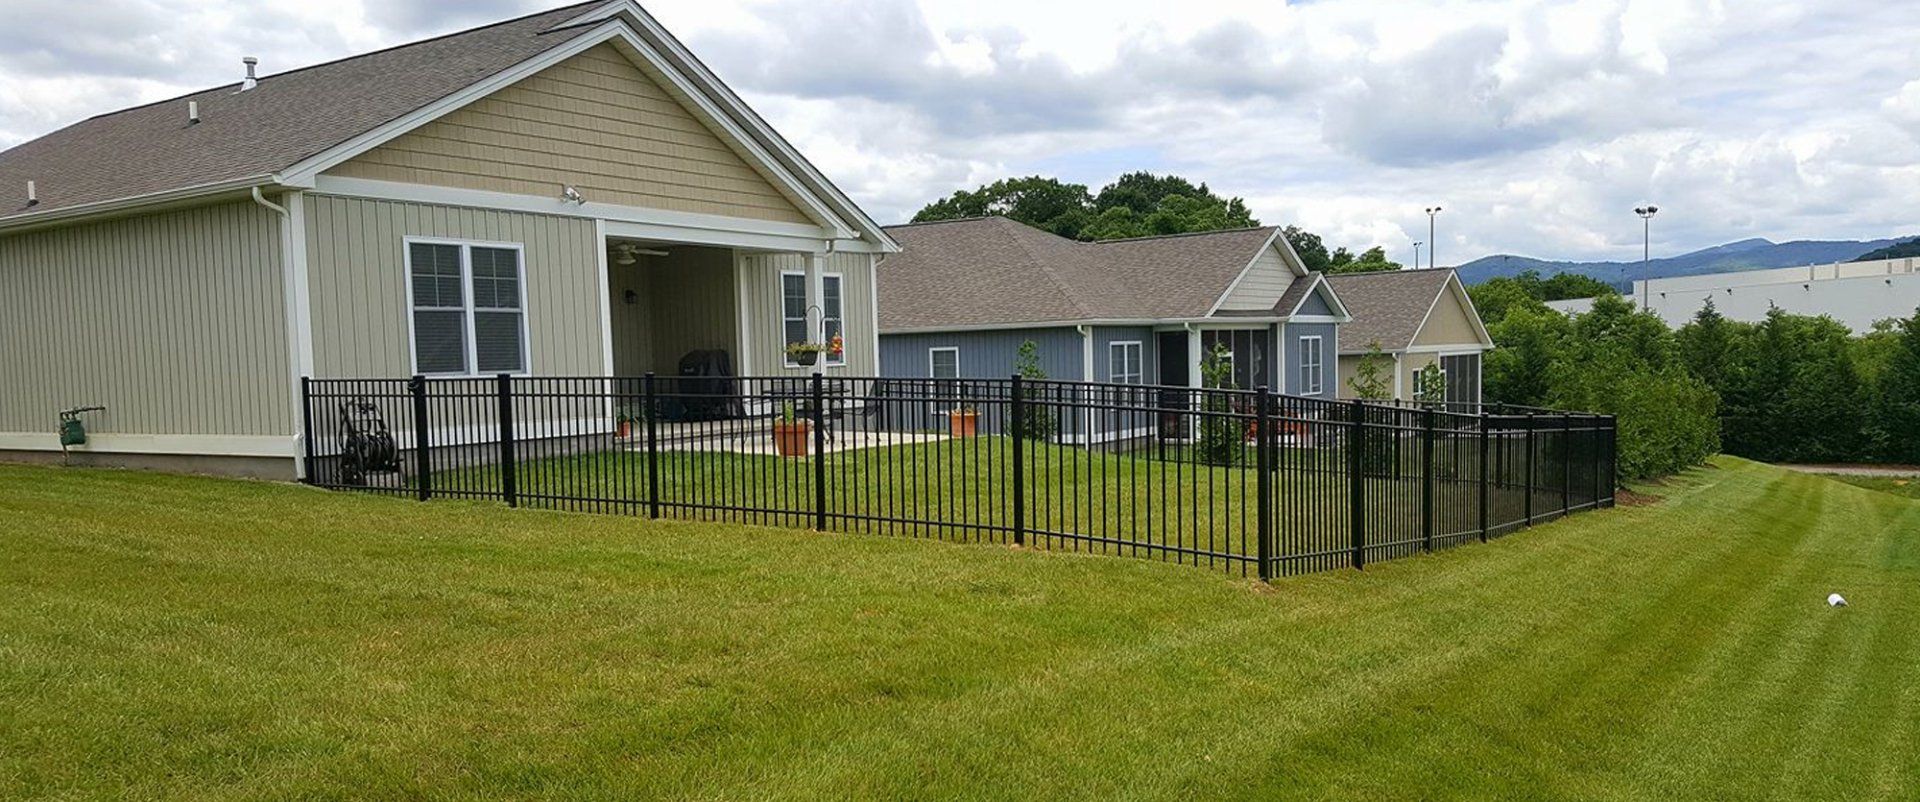 Fencing Services Roanoke Fence Installation & Repair Christiansburg & Blacksburg VA